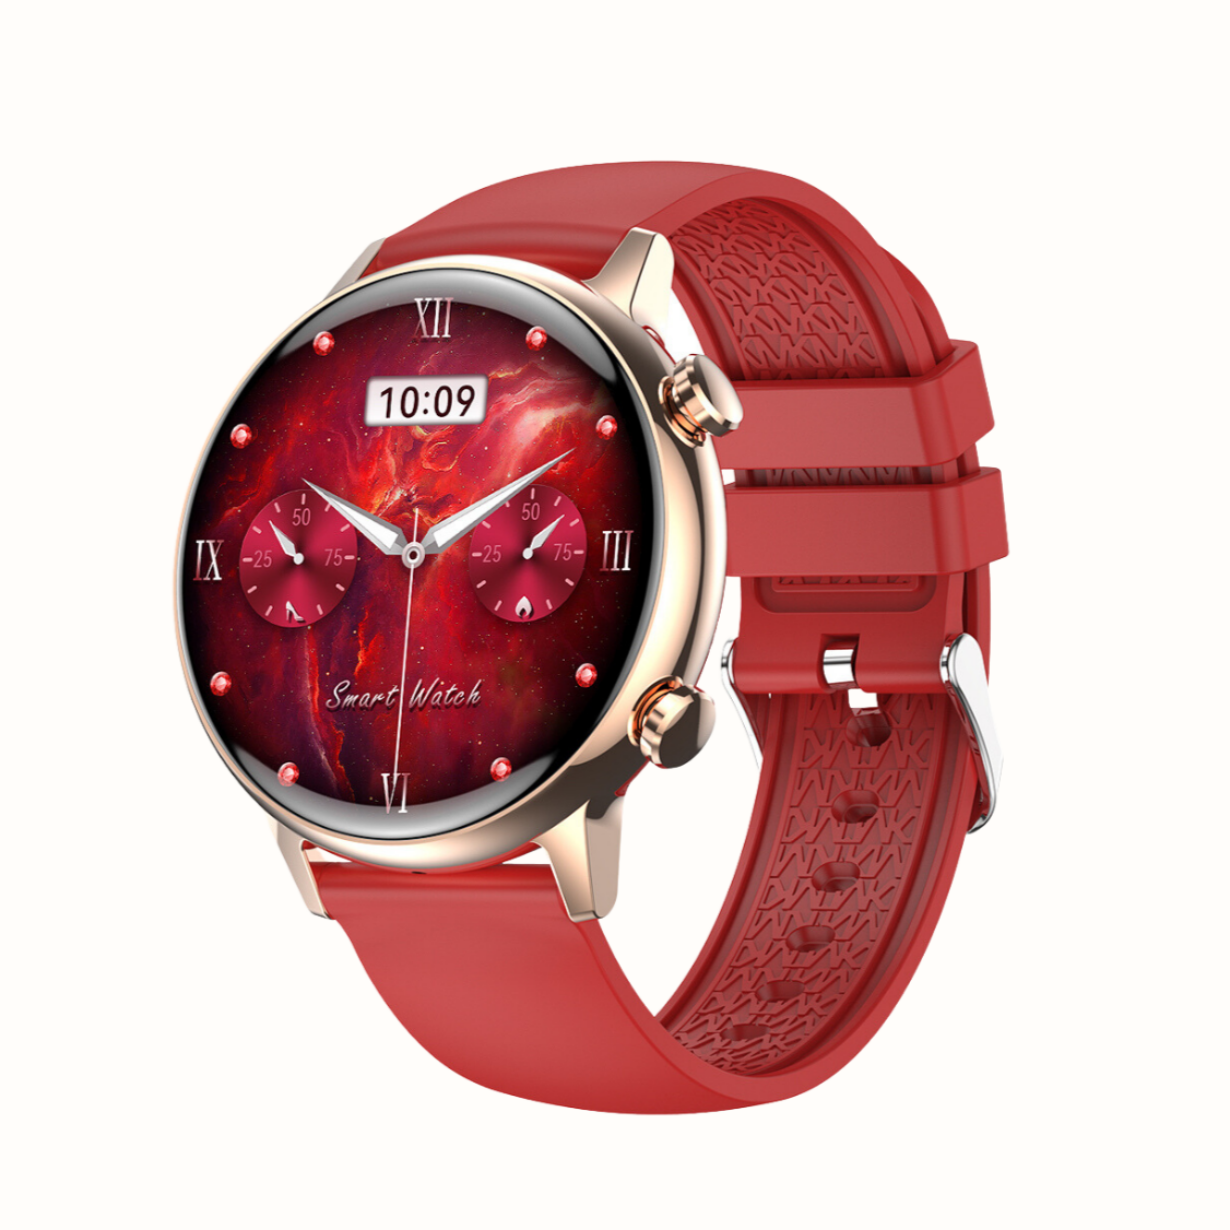 Women's Smartwatch With AMOLED Display - Infiniity